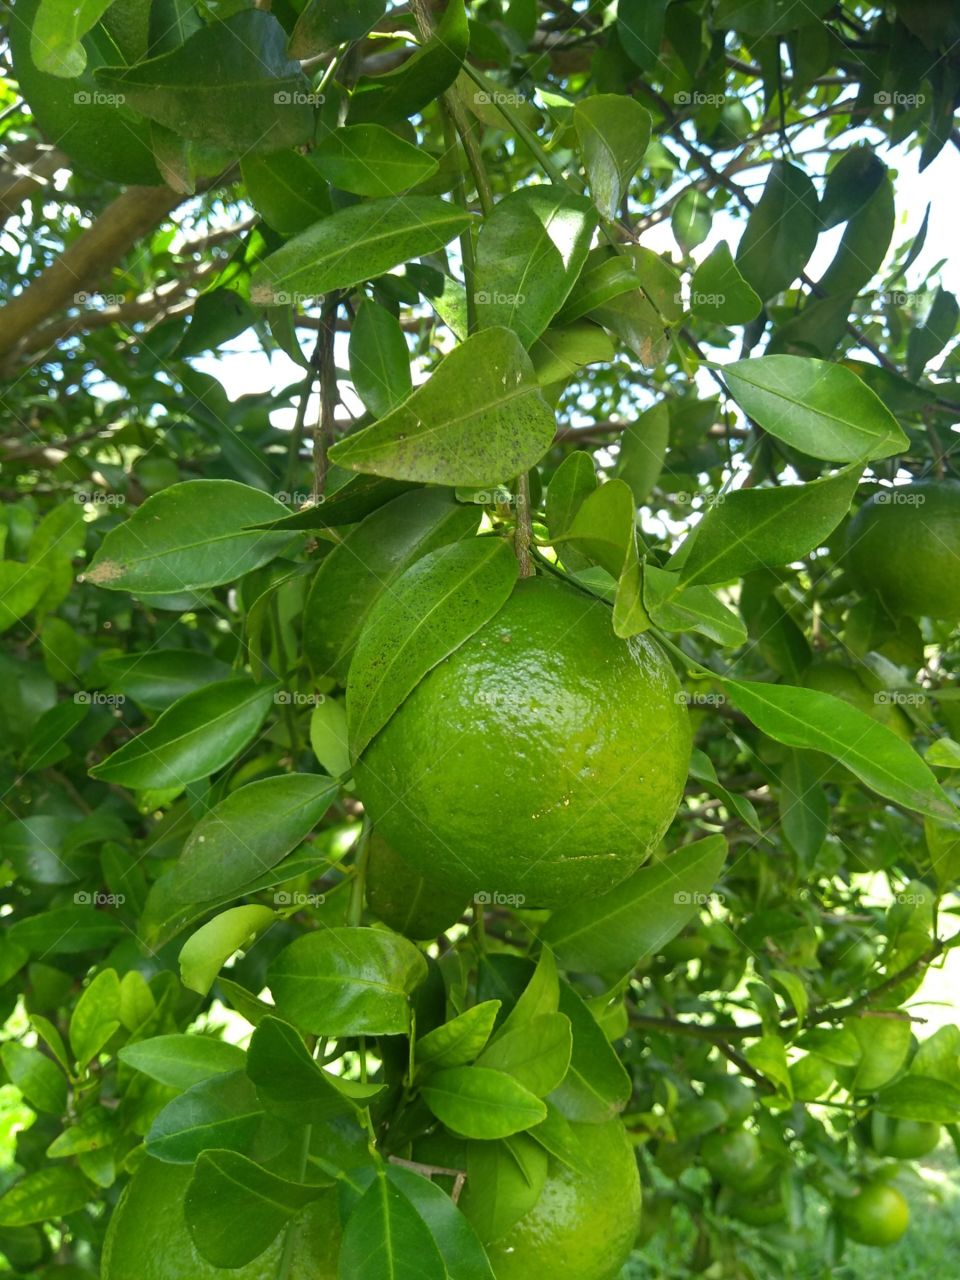 A Green Tangerine pending of a tree in Brazil